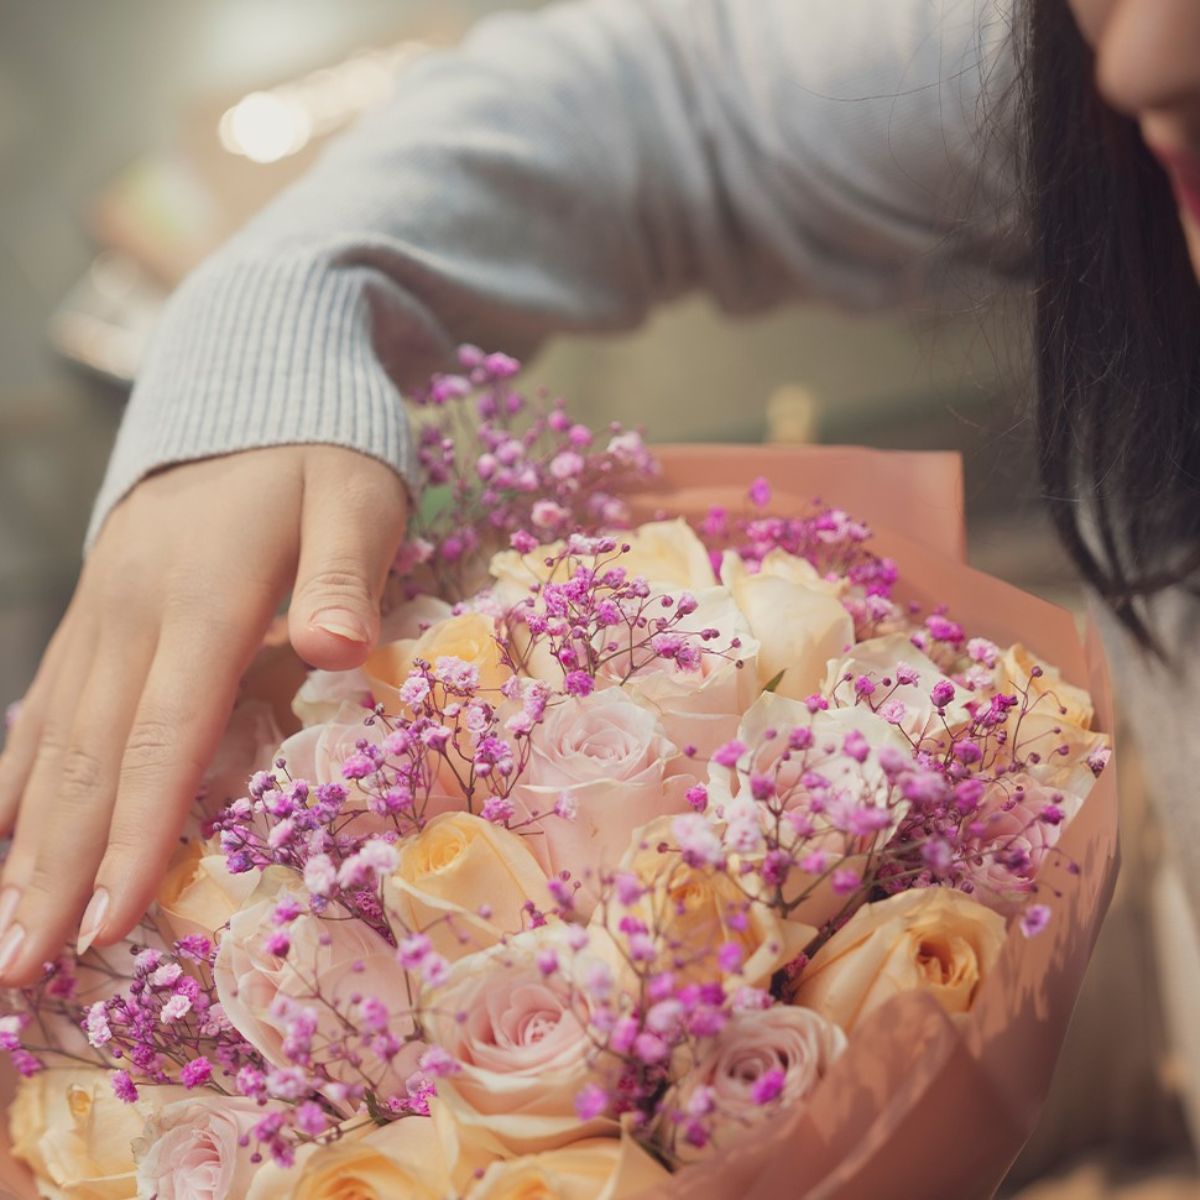 Floward has become an ultra successful flower sales platform